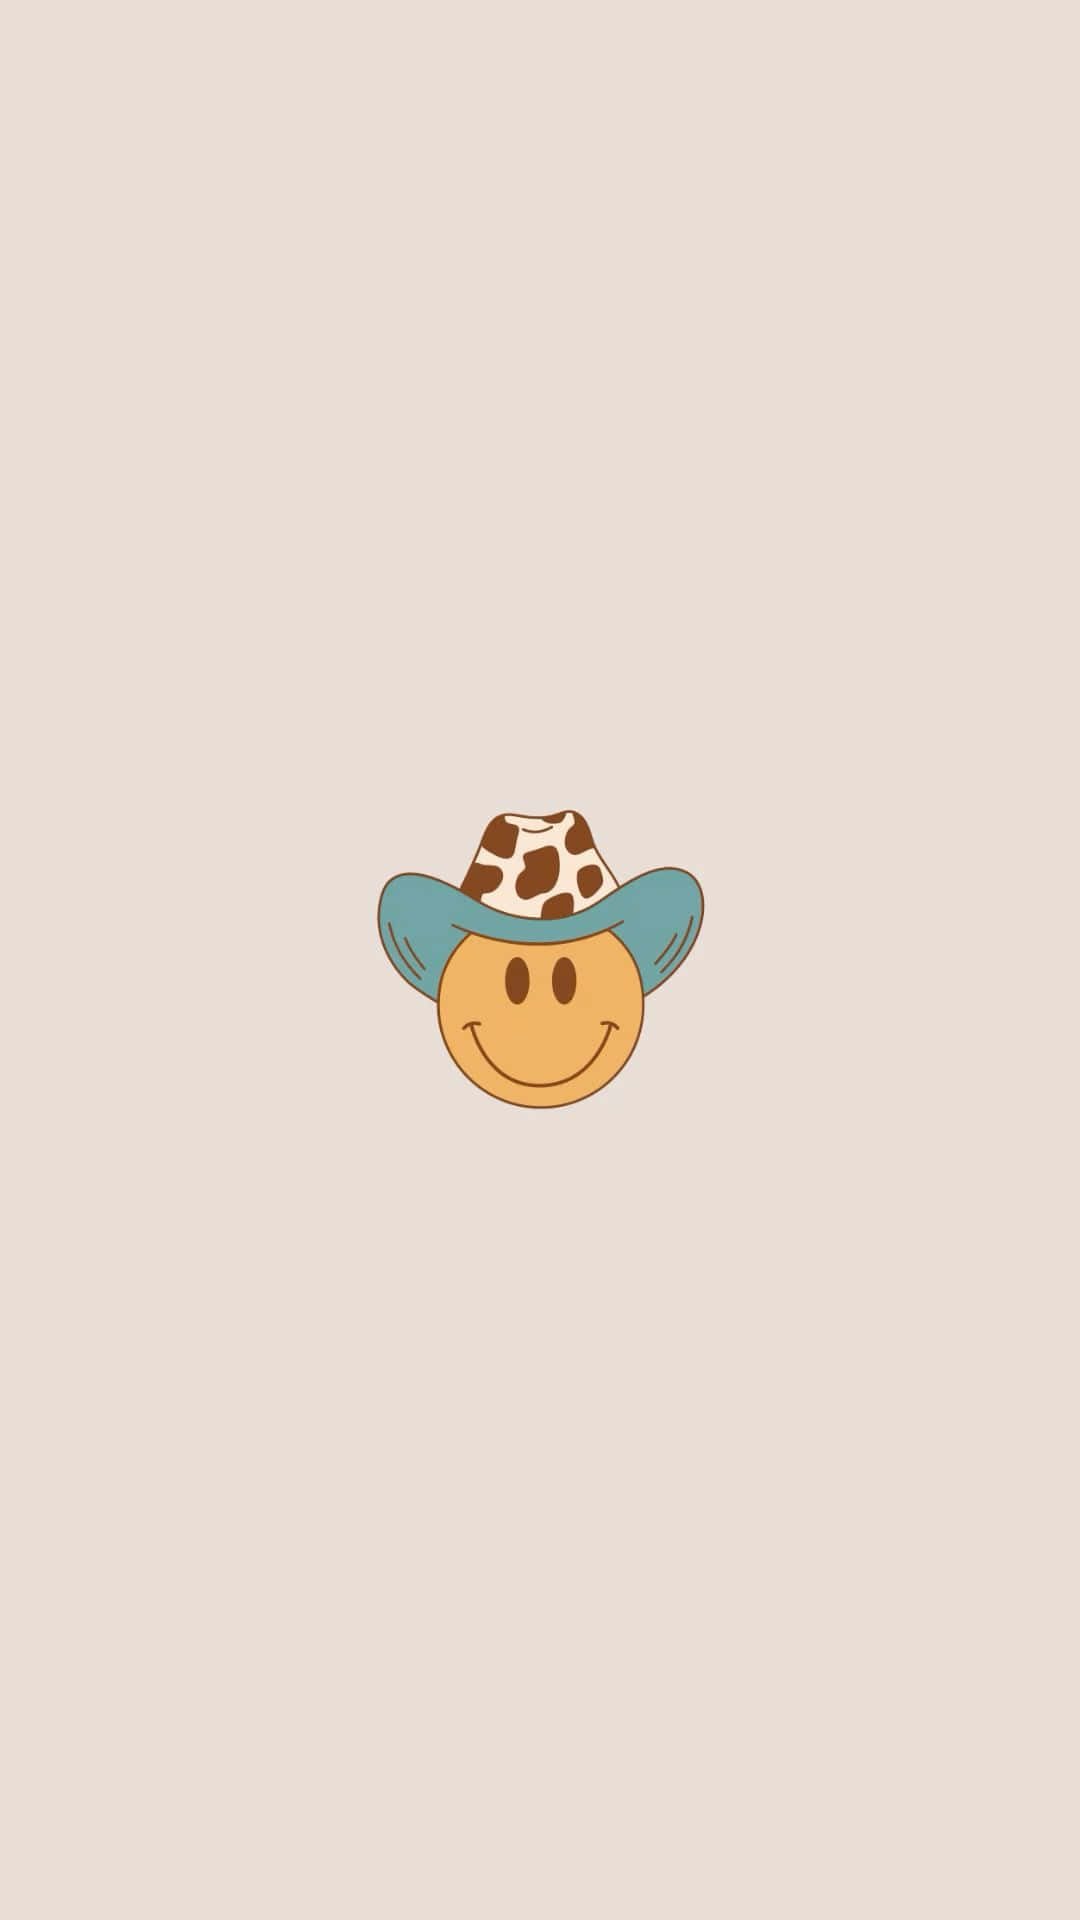 Smiley Face Cowgirl Hat Emoji Wallpaper